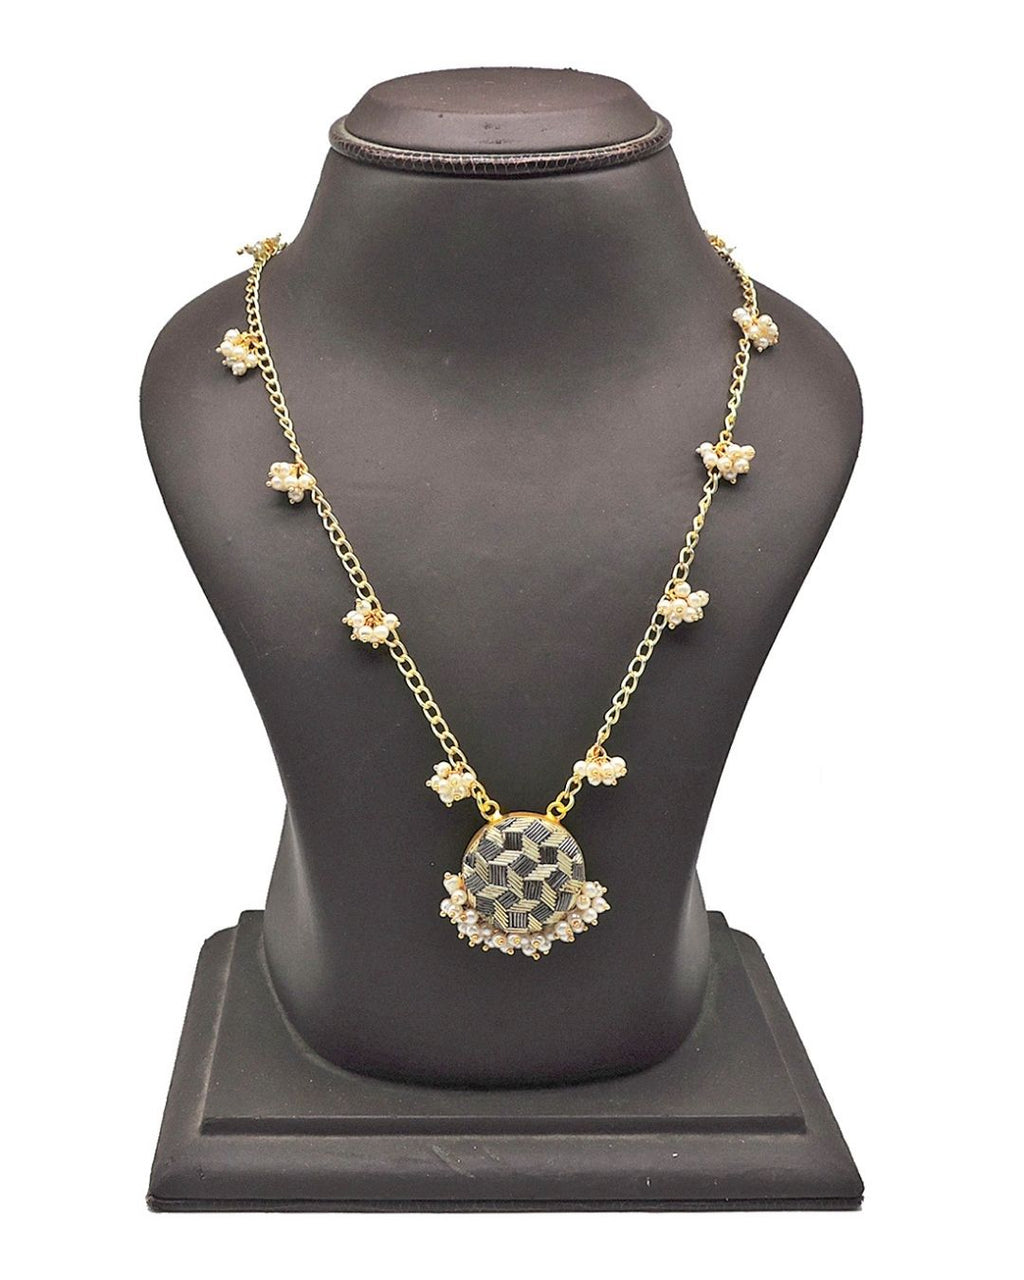 Zardosi Crown Necklace - Necklaces - Handcrafted Jewellery - Made in India - Dubai Jewellery, Fashion & Lifestyle - Dori